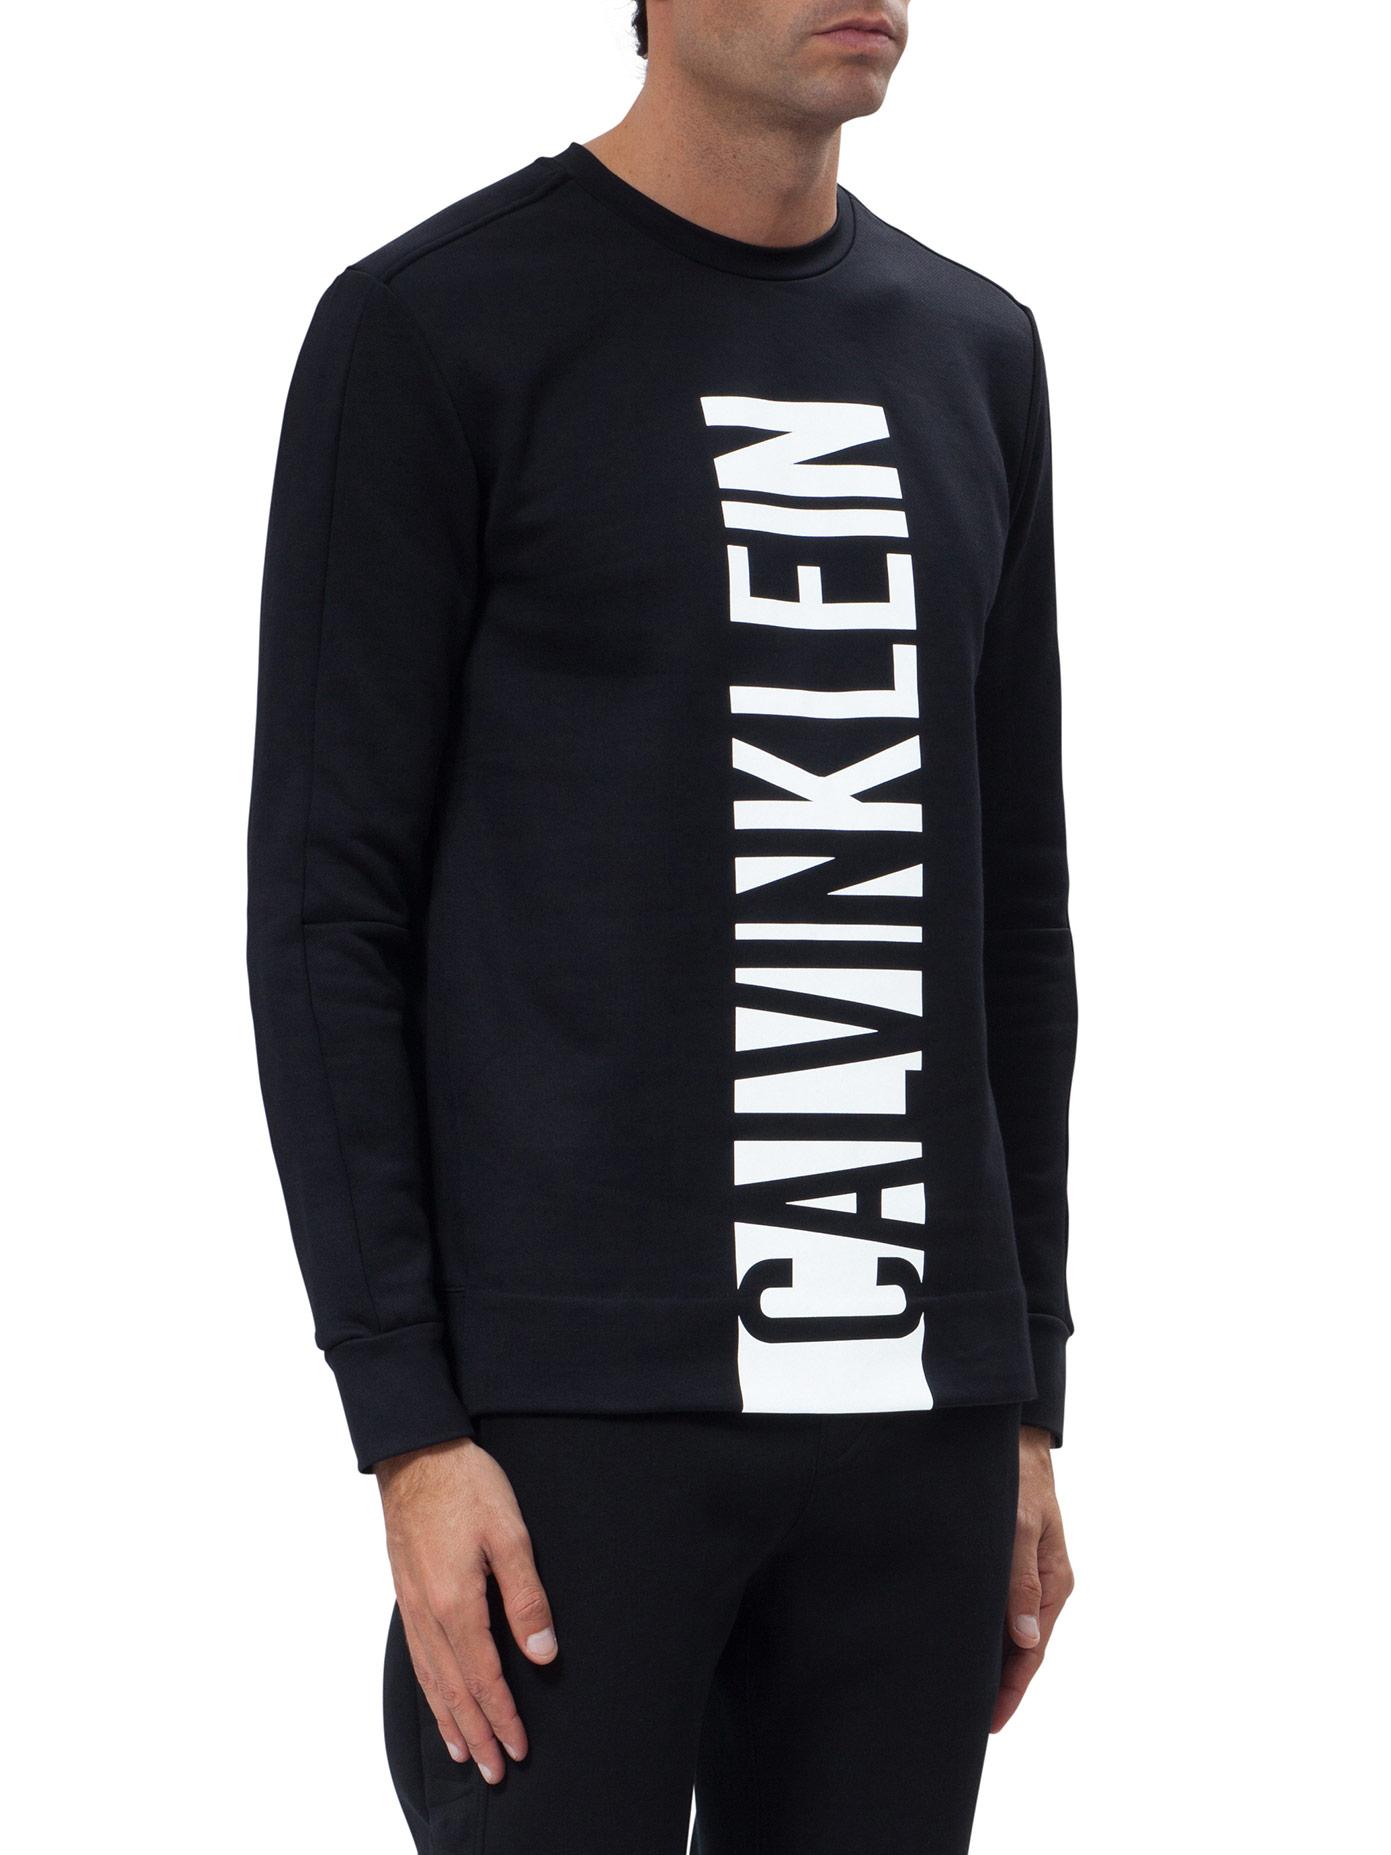 Lyst - Calvin Klein Jeans Logo Print Sweatshirt in Black for Men